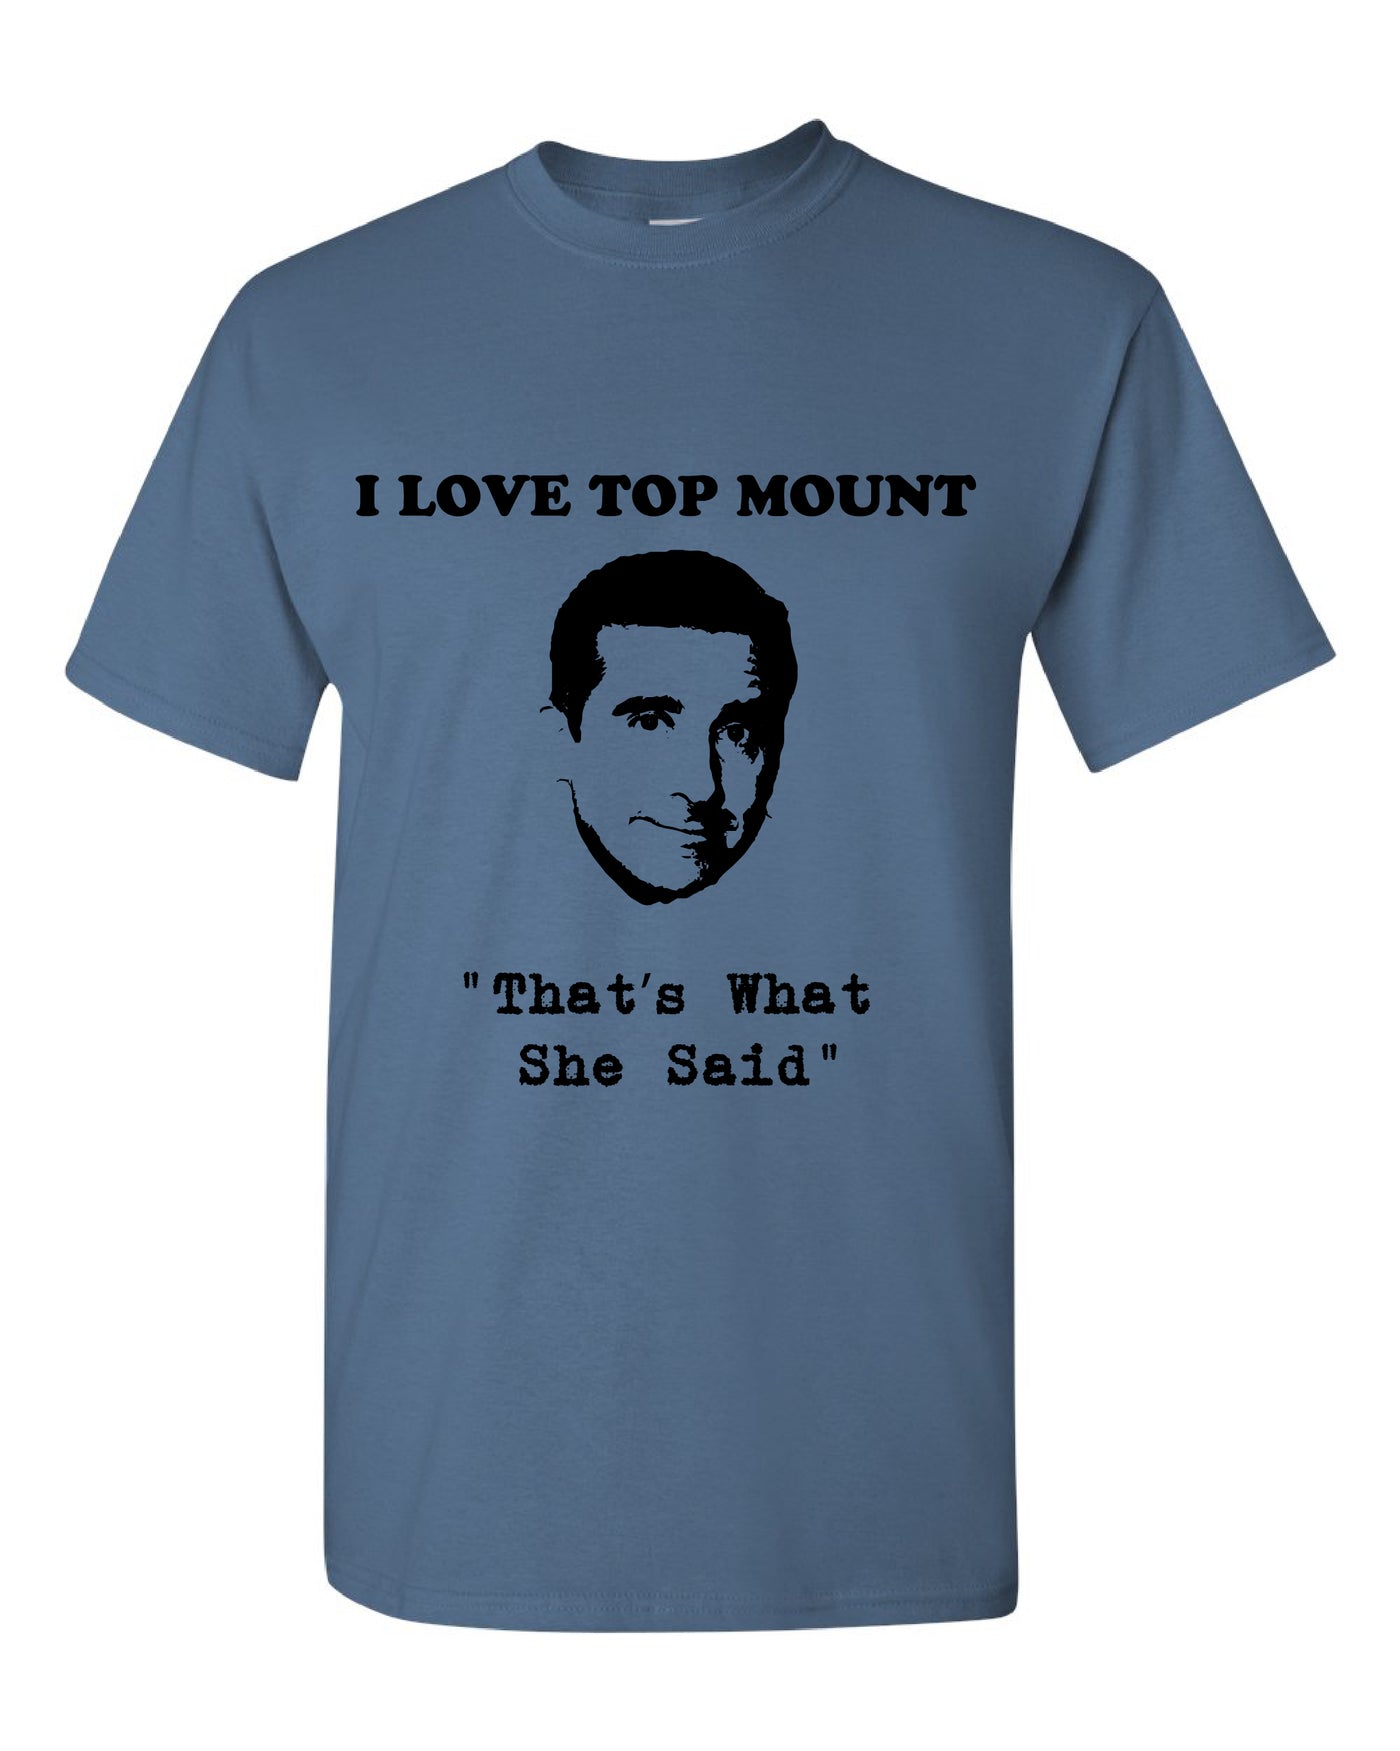 I Love Top Mount "That's What She Said" Tee